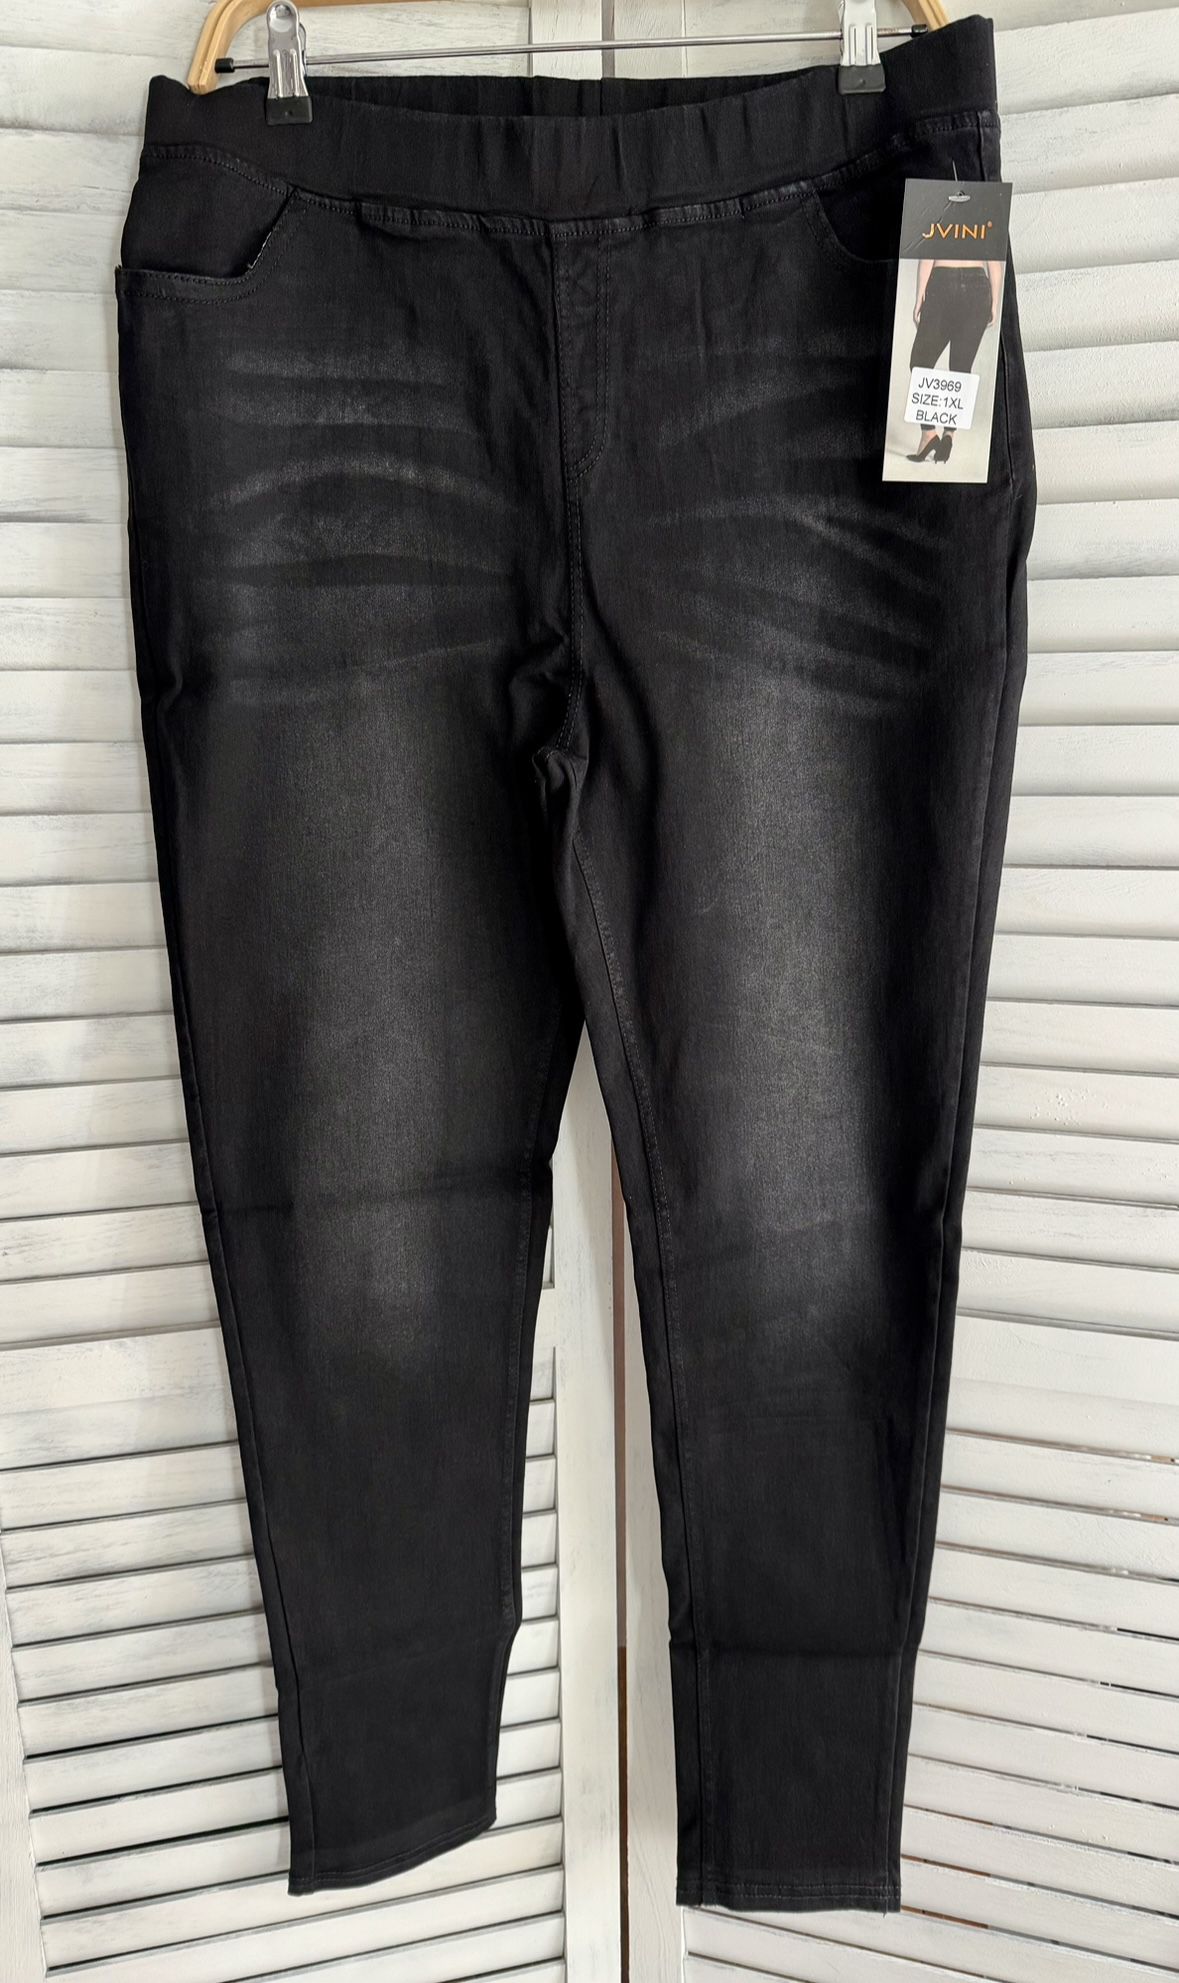 Black Skinny Jeans, 1XL